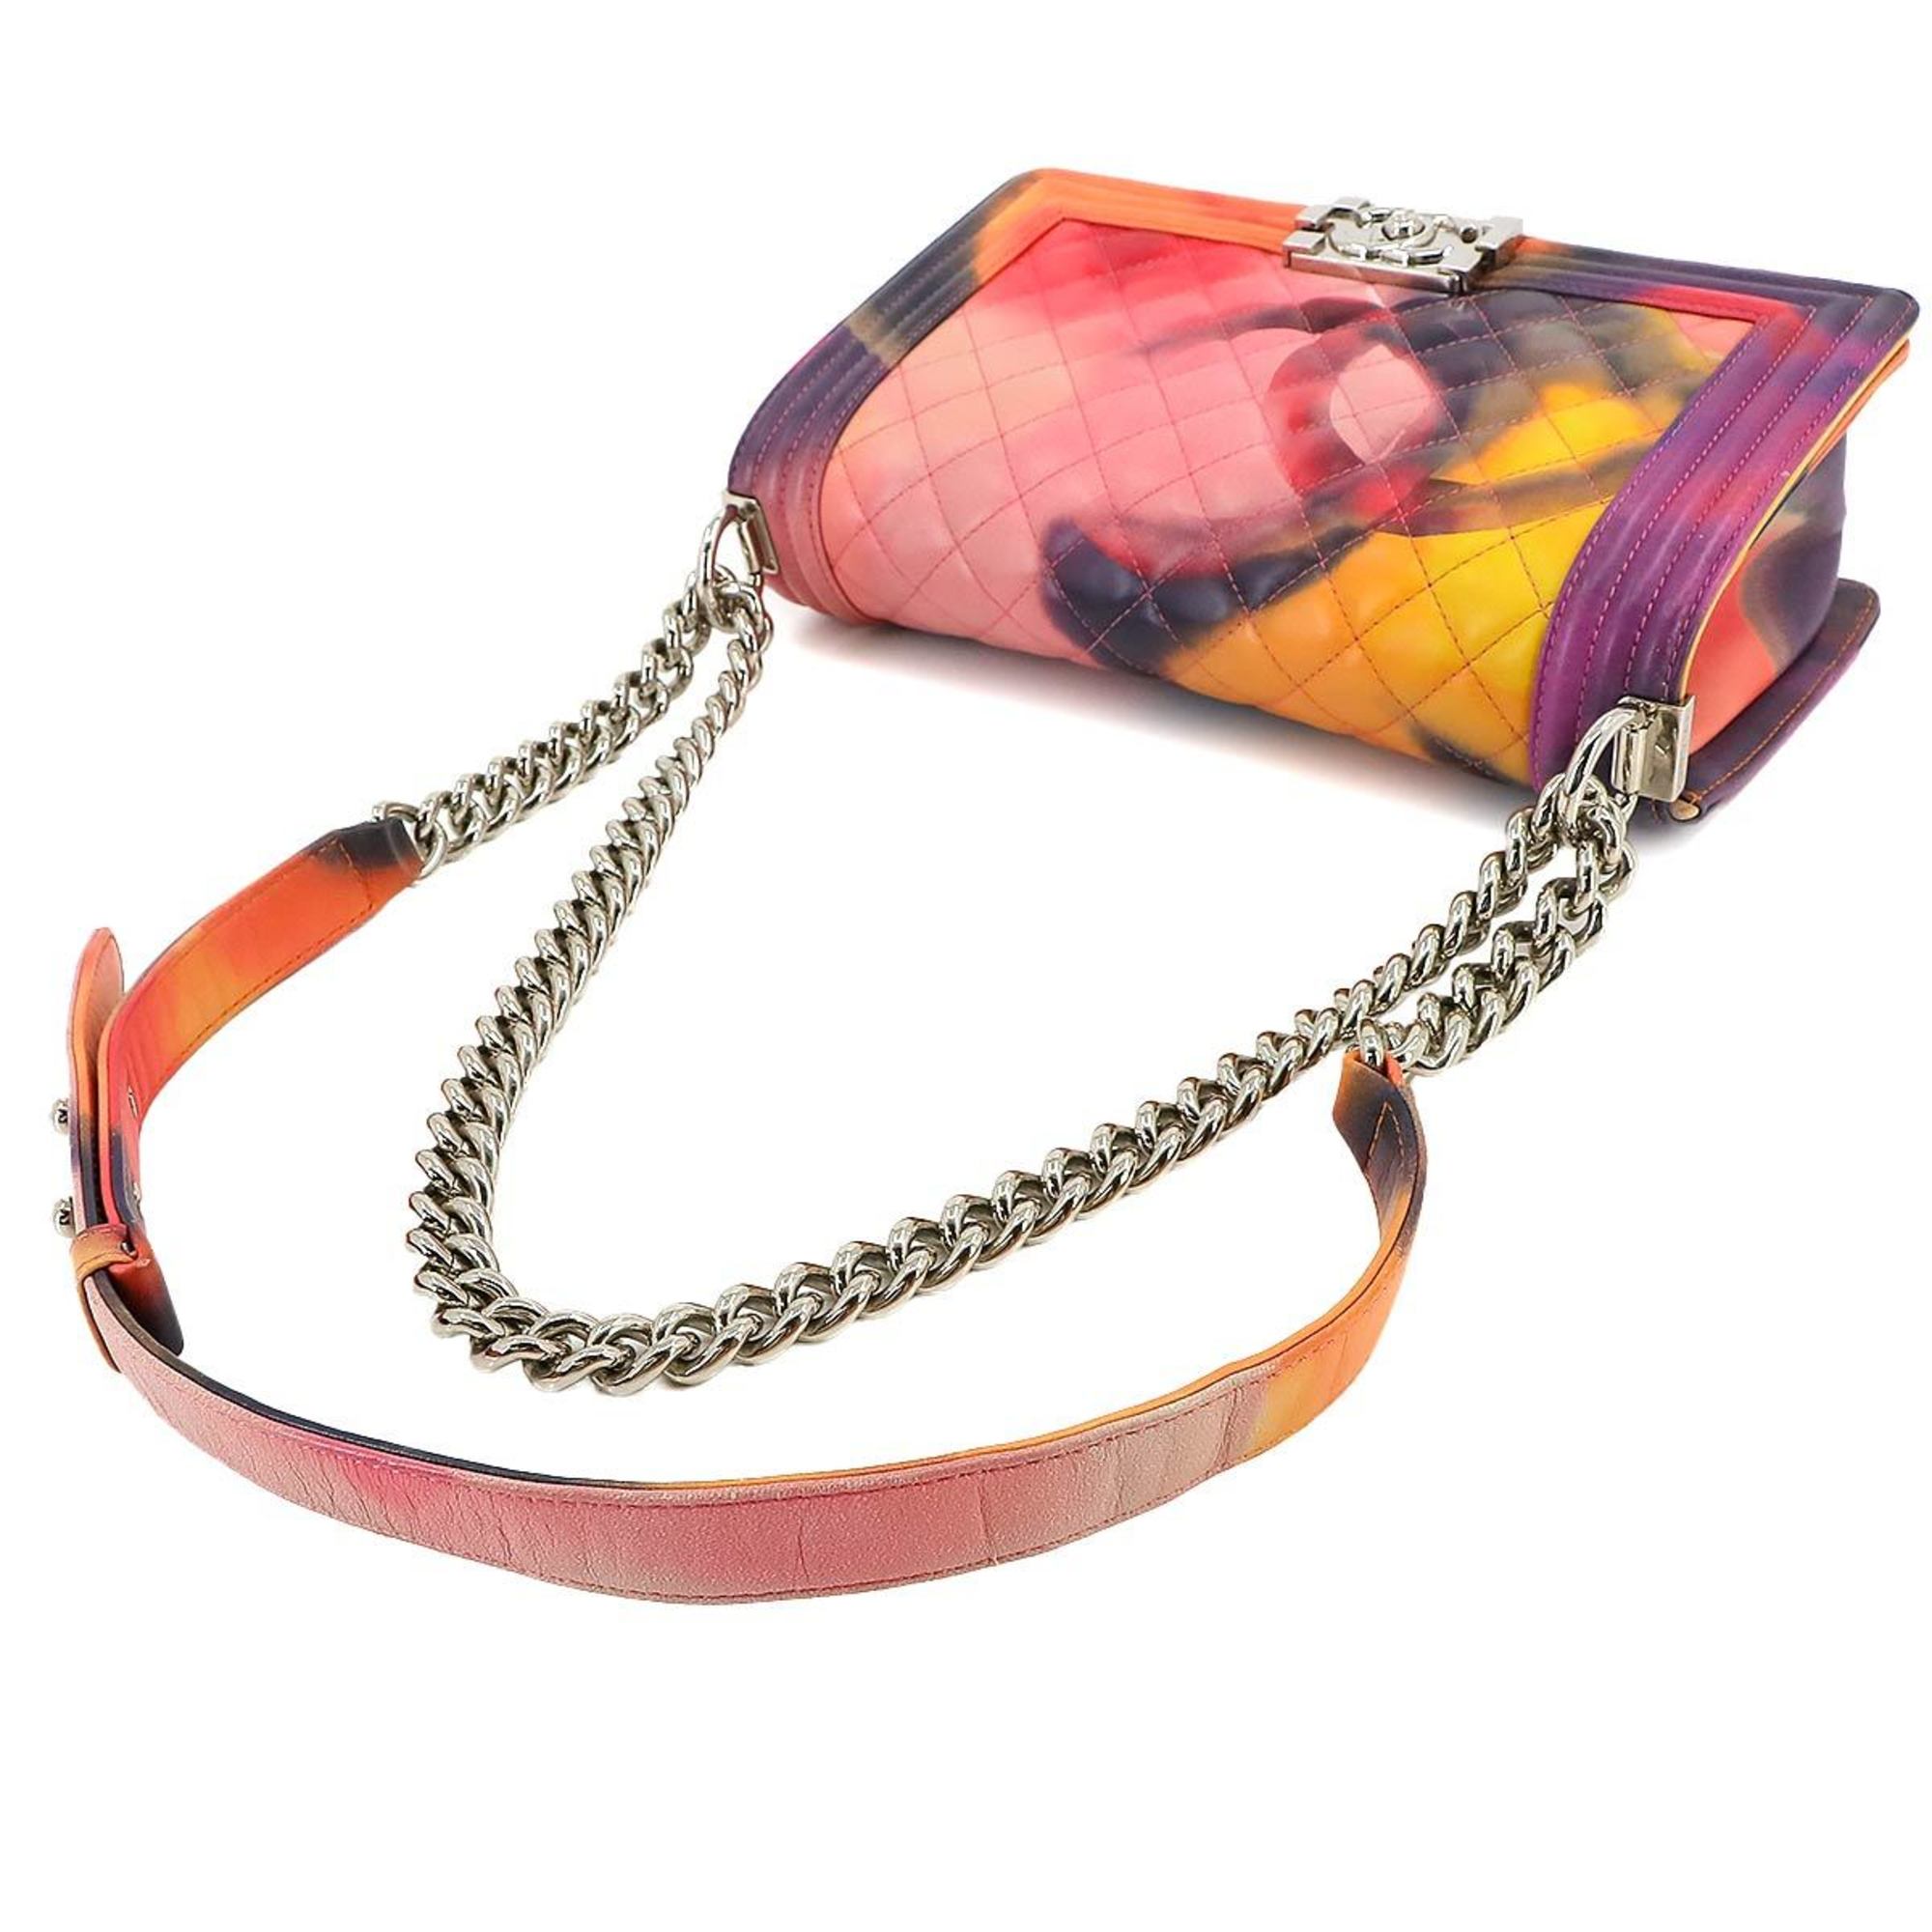 CHANEL Boy Chanel Chain Shoulder Bag Leather Multicolor A90833 Flower Power